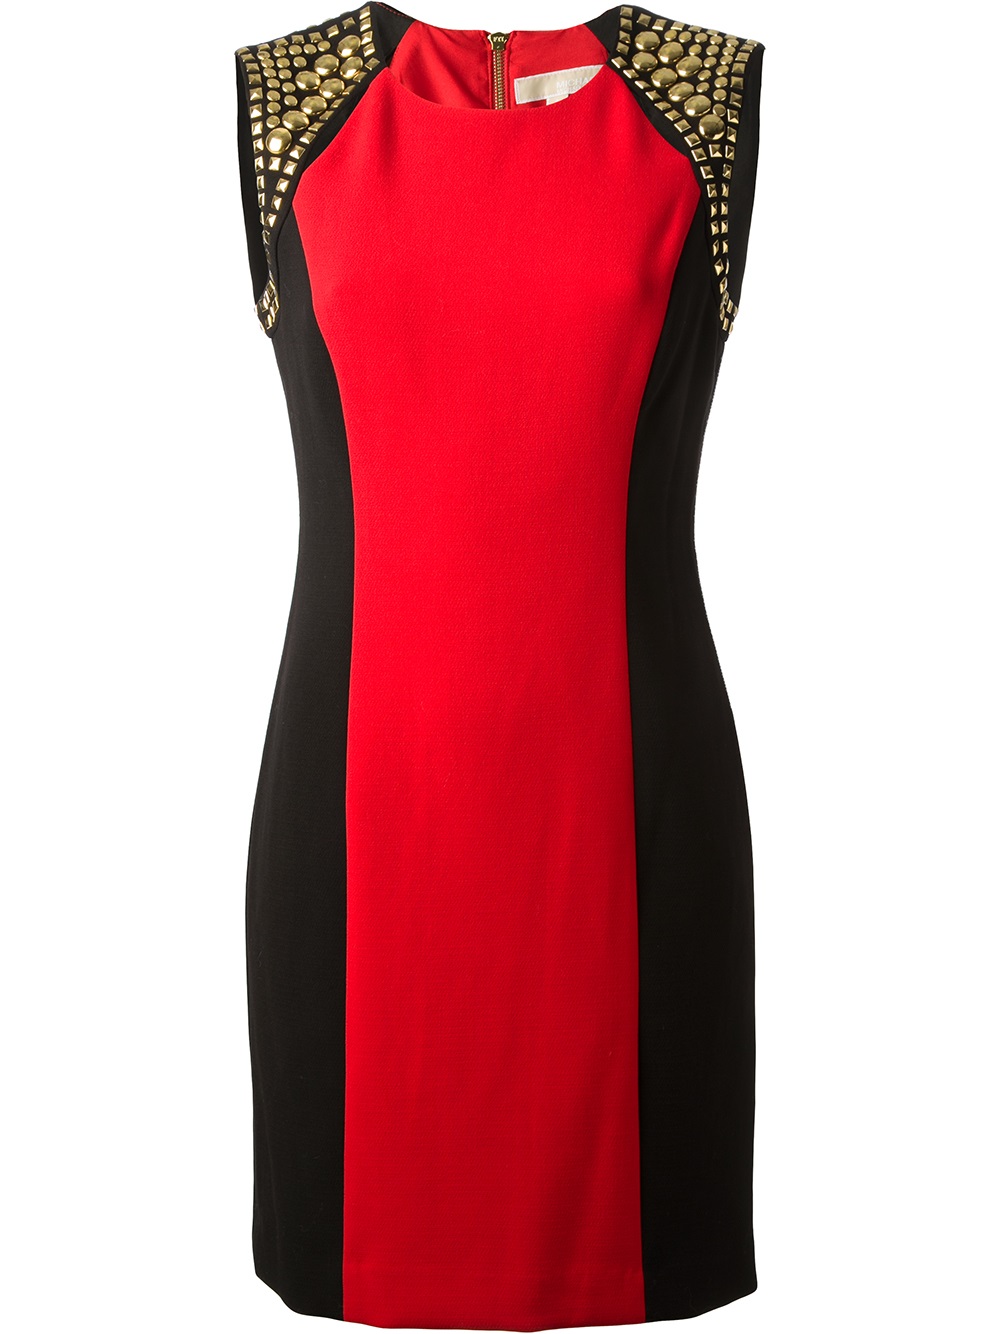 Lyst - Michael Michael Kors Sleeveless Studded Dress in Red